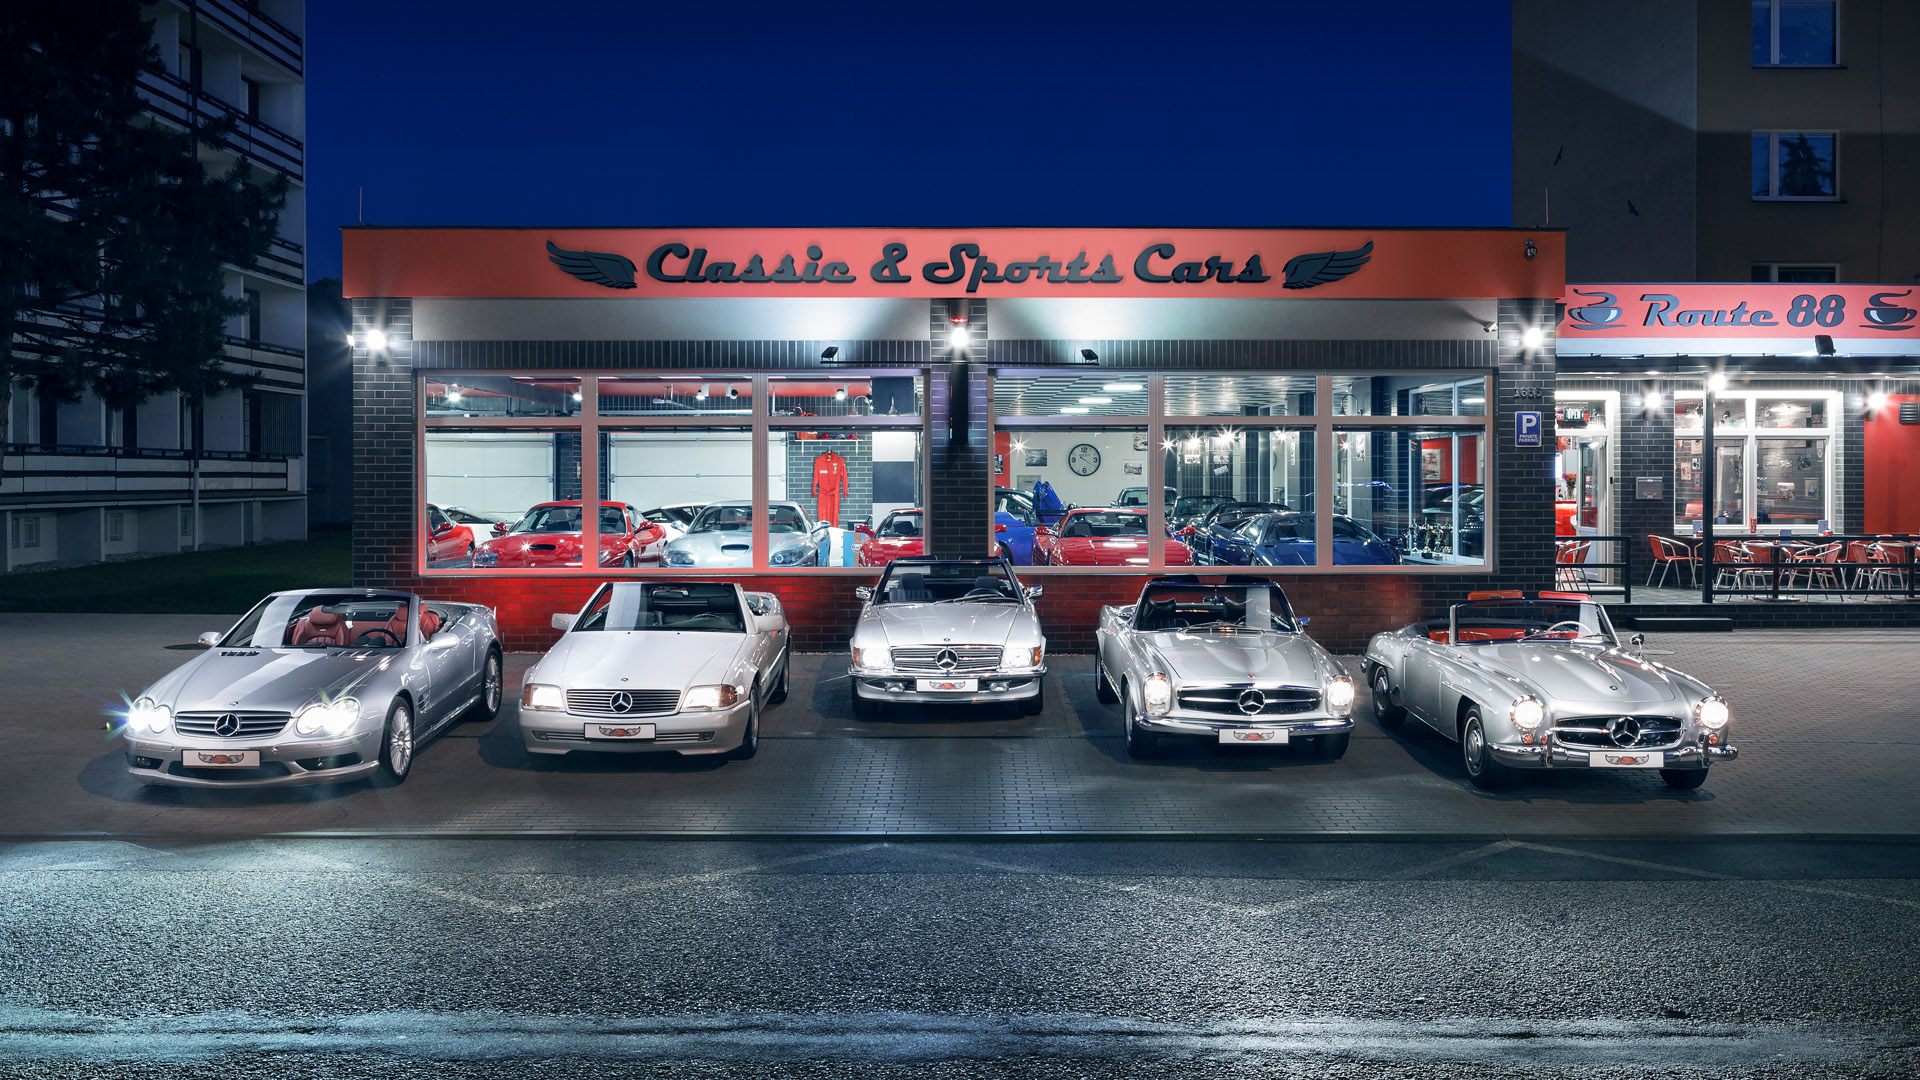 Classic & Sports Cars